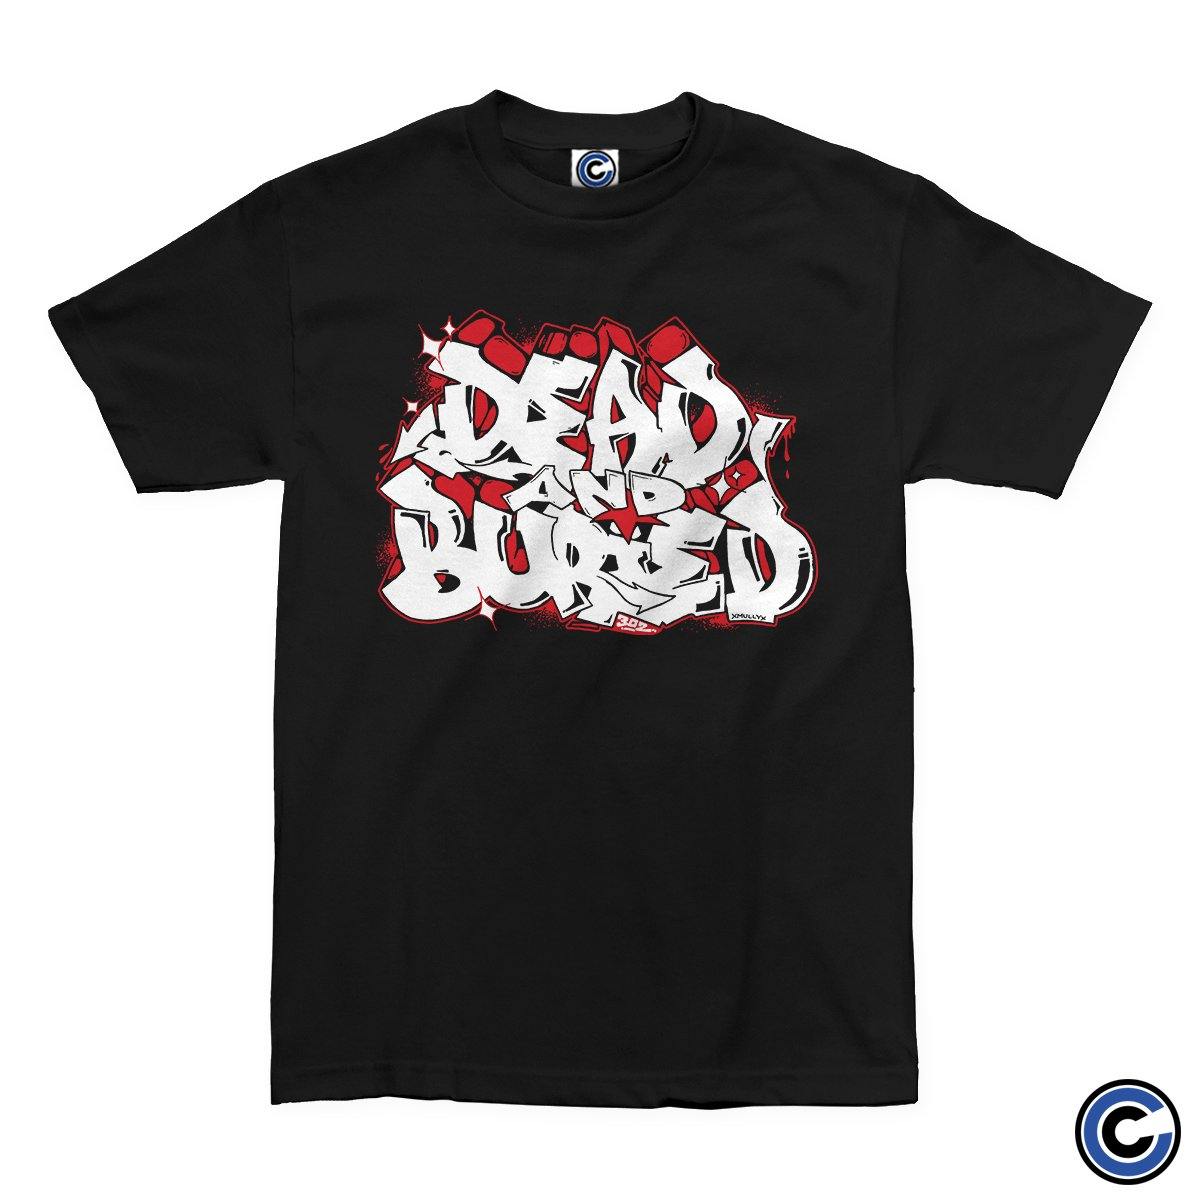 Buy – Dead and Buried "Graffiti" Shirt – Band & Music Merch – Cold Cuts Merch